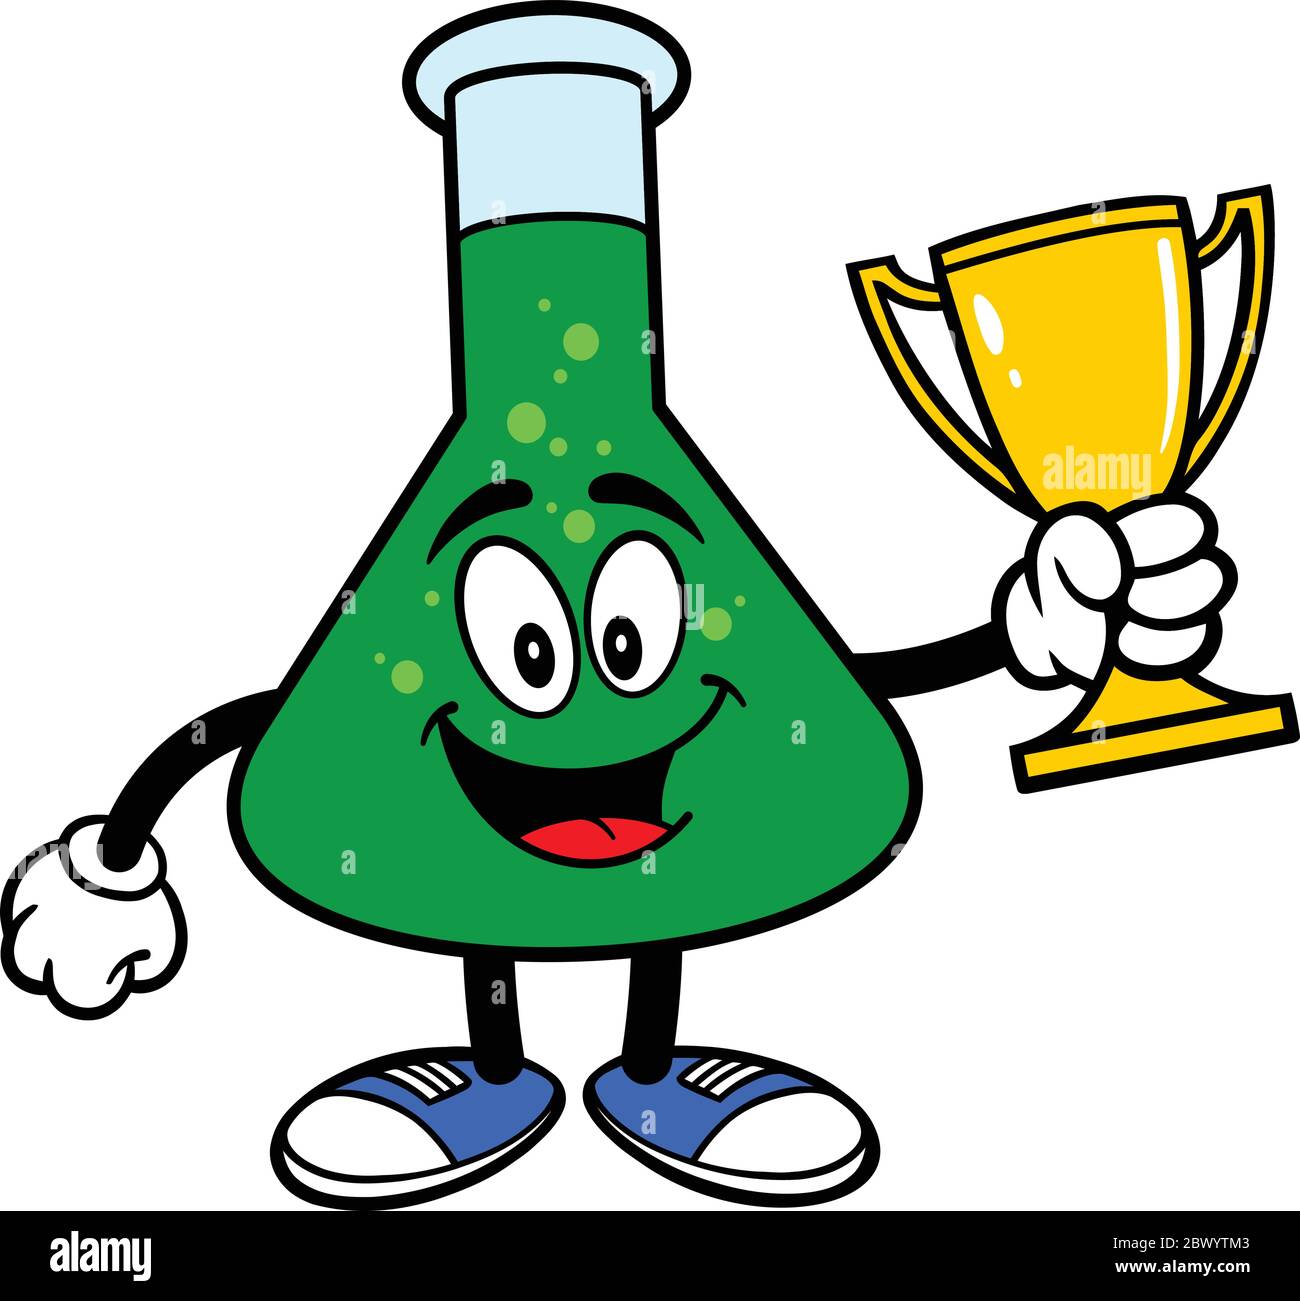 Chemistry Flask Mascot with Trophy - EINE Cartoon-Illustration eines Chemistry Flask Mascot with a Trophy. Stock Vektor